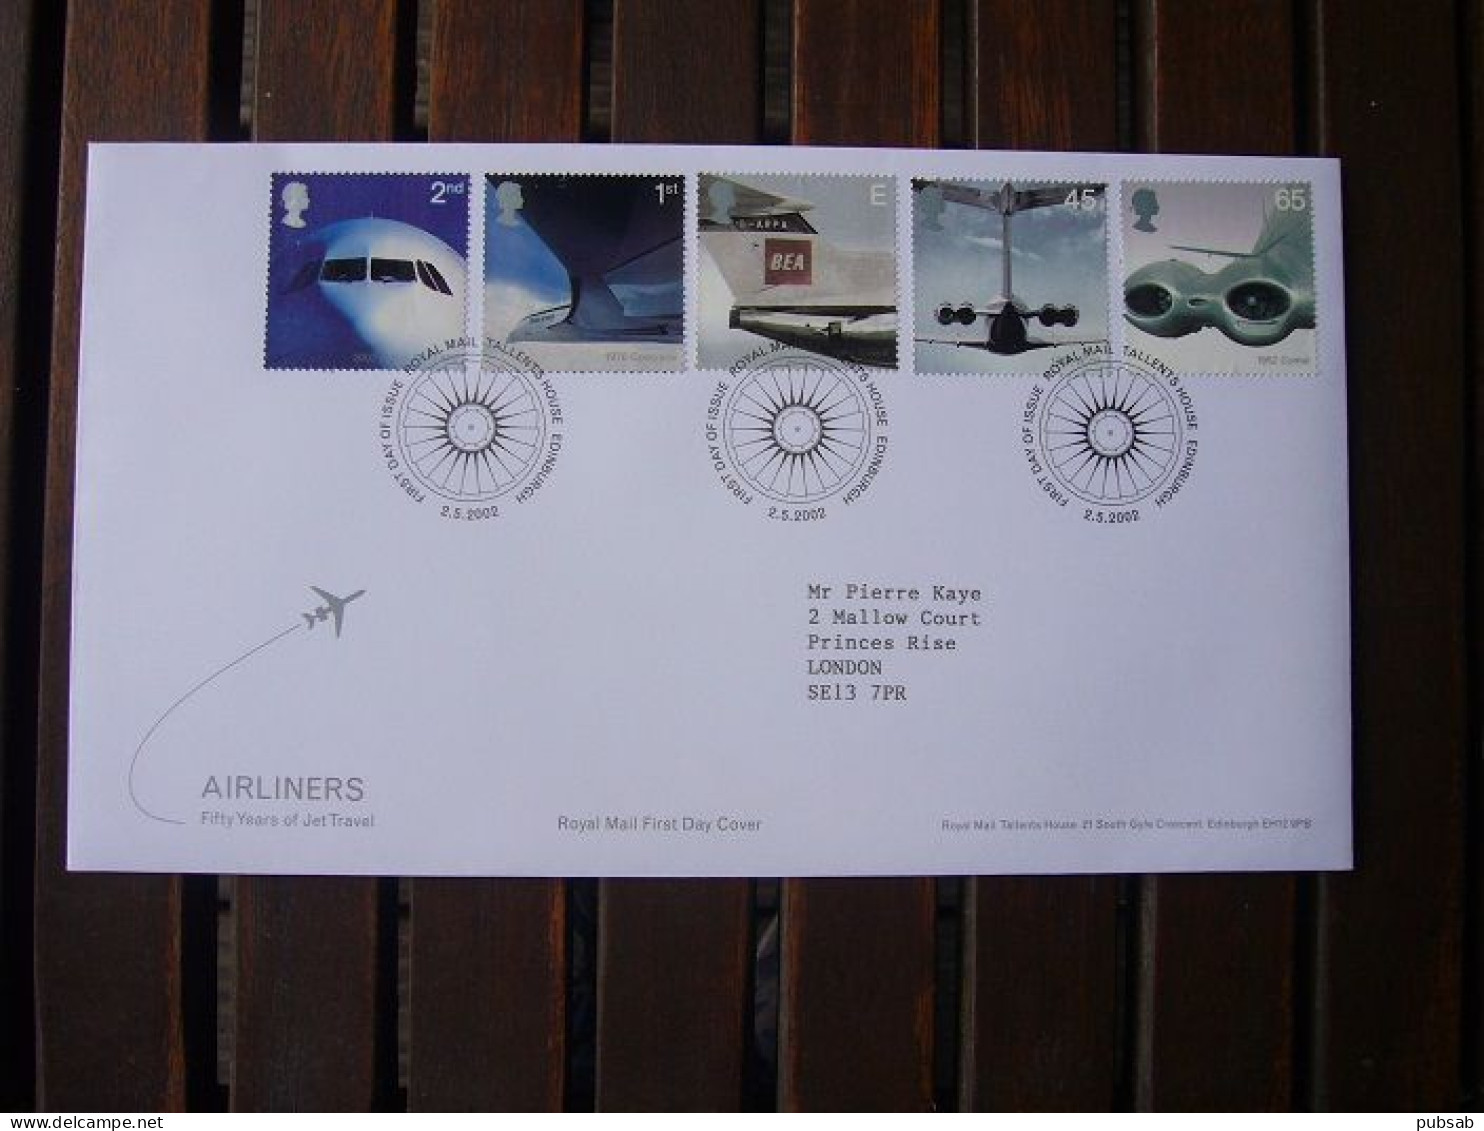 Avion / Airplane / BRITISH AIRWAYS / Airbus - Concorde - Trident - VC-10 - Comet / May 2,2002 - 2001-2010 Dezimalausgaben